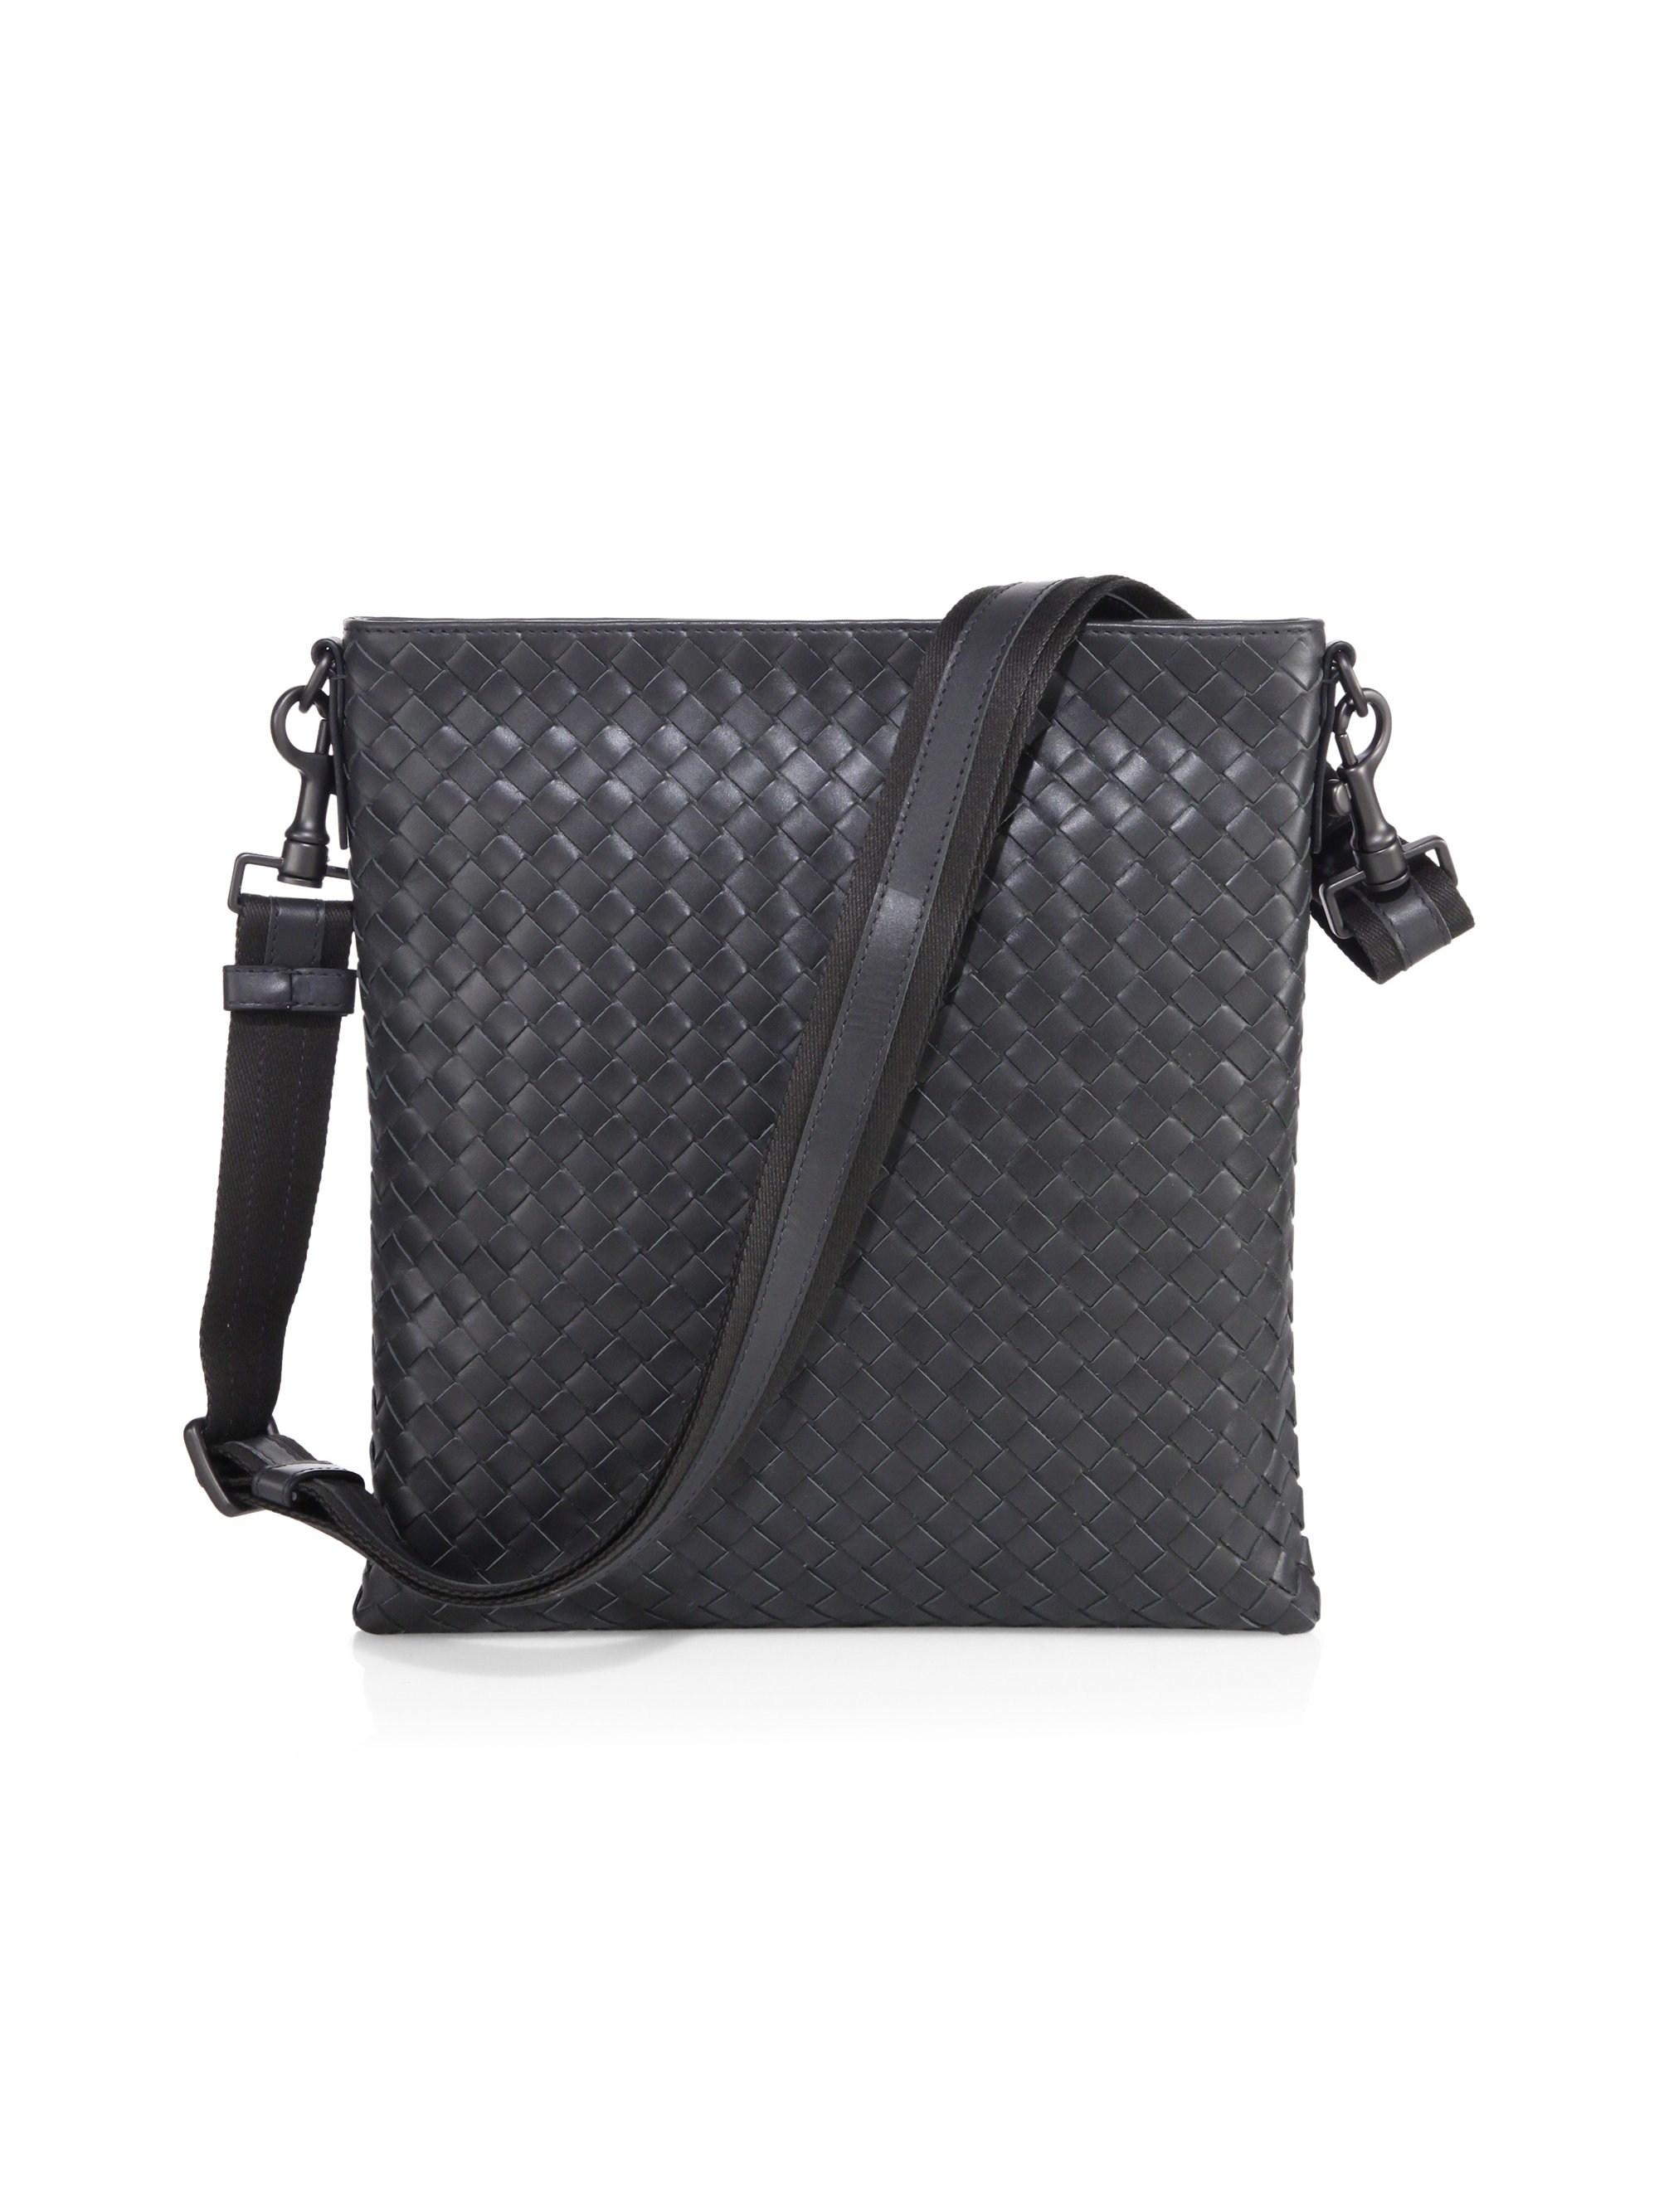 Lyst - Bottega Veneta Men's Borsa Intrecciato Leather Crossbody Bag